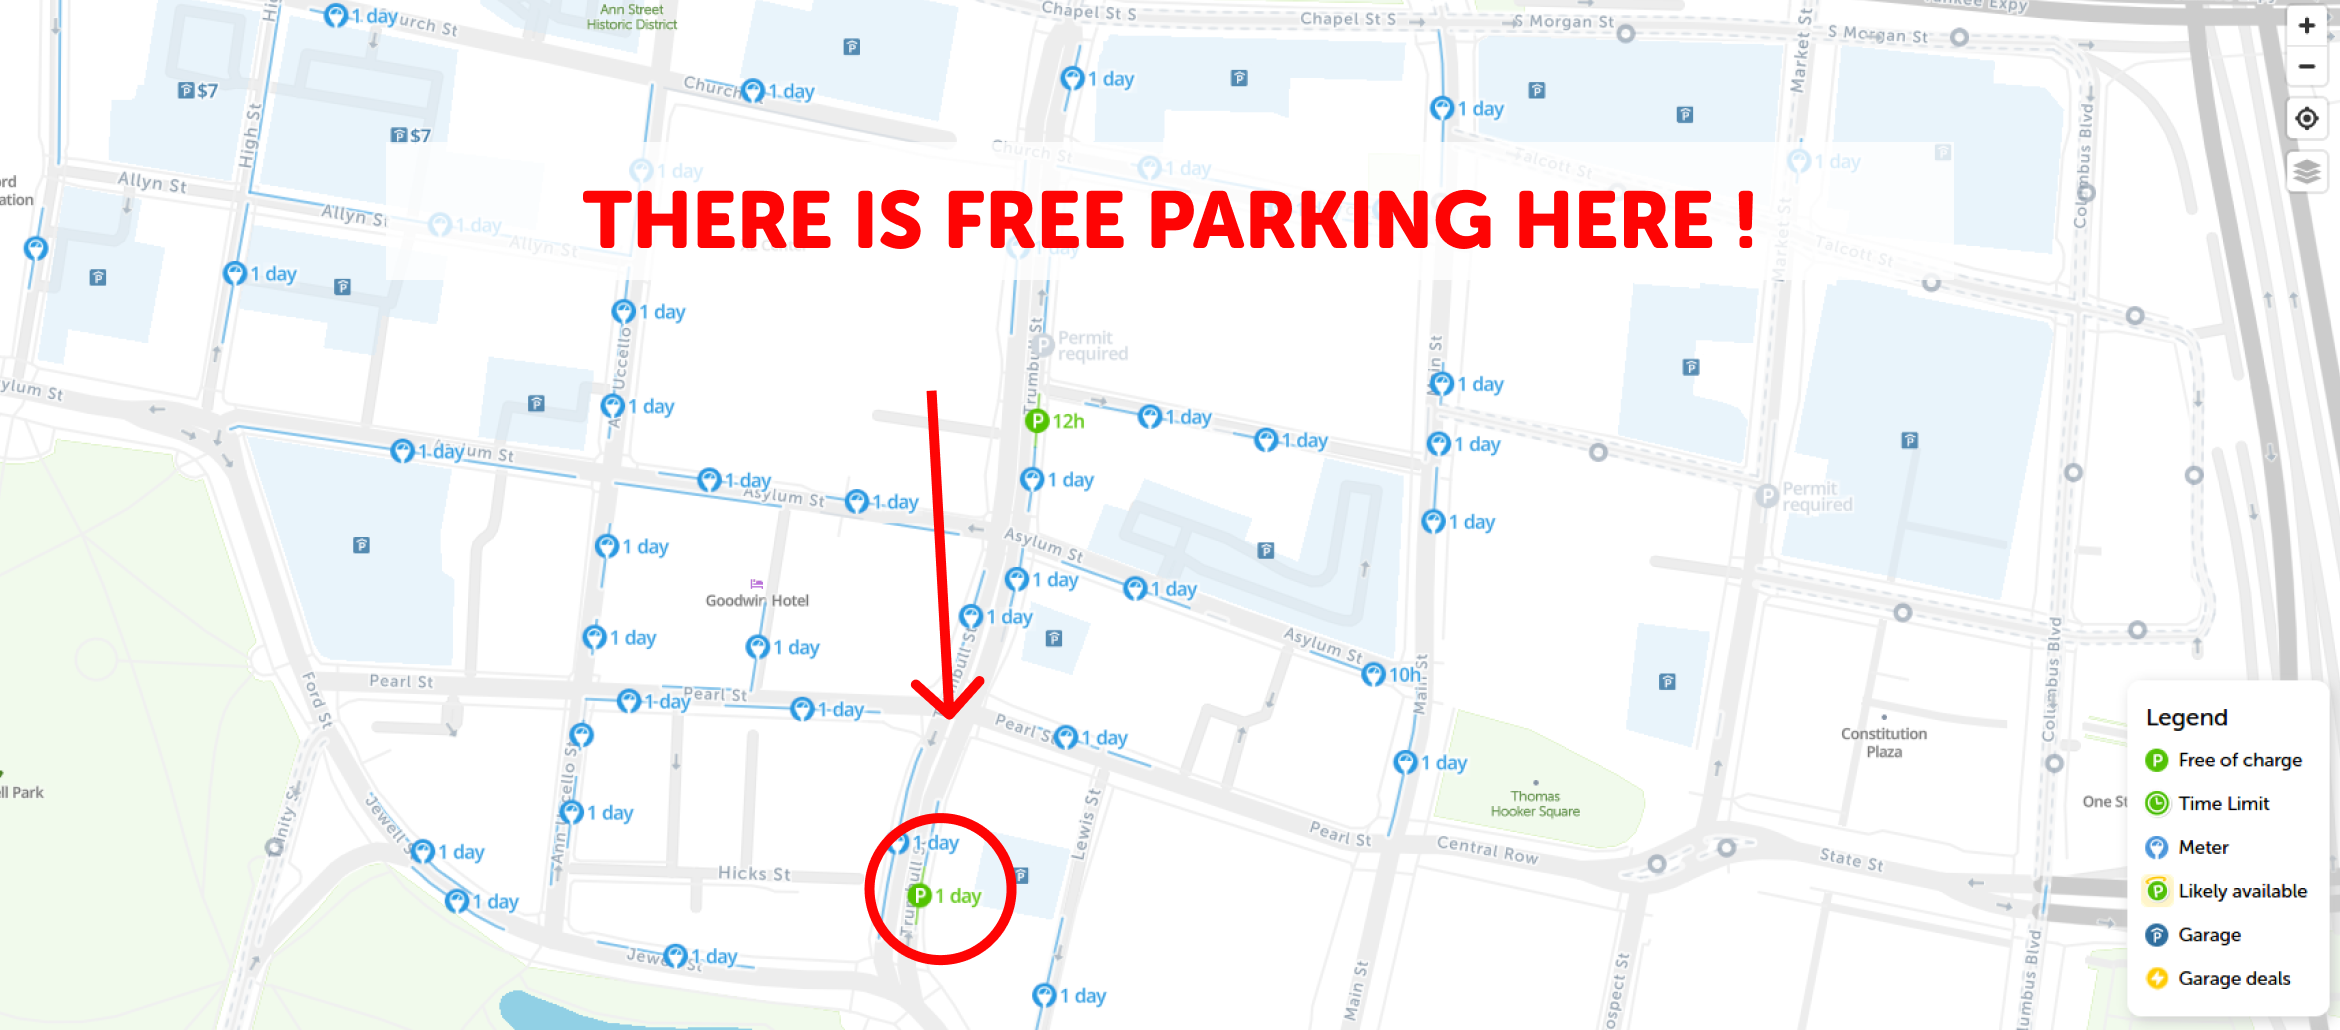 map of free parking in Hartford - SpotAngels